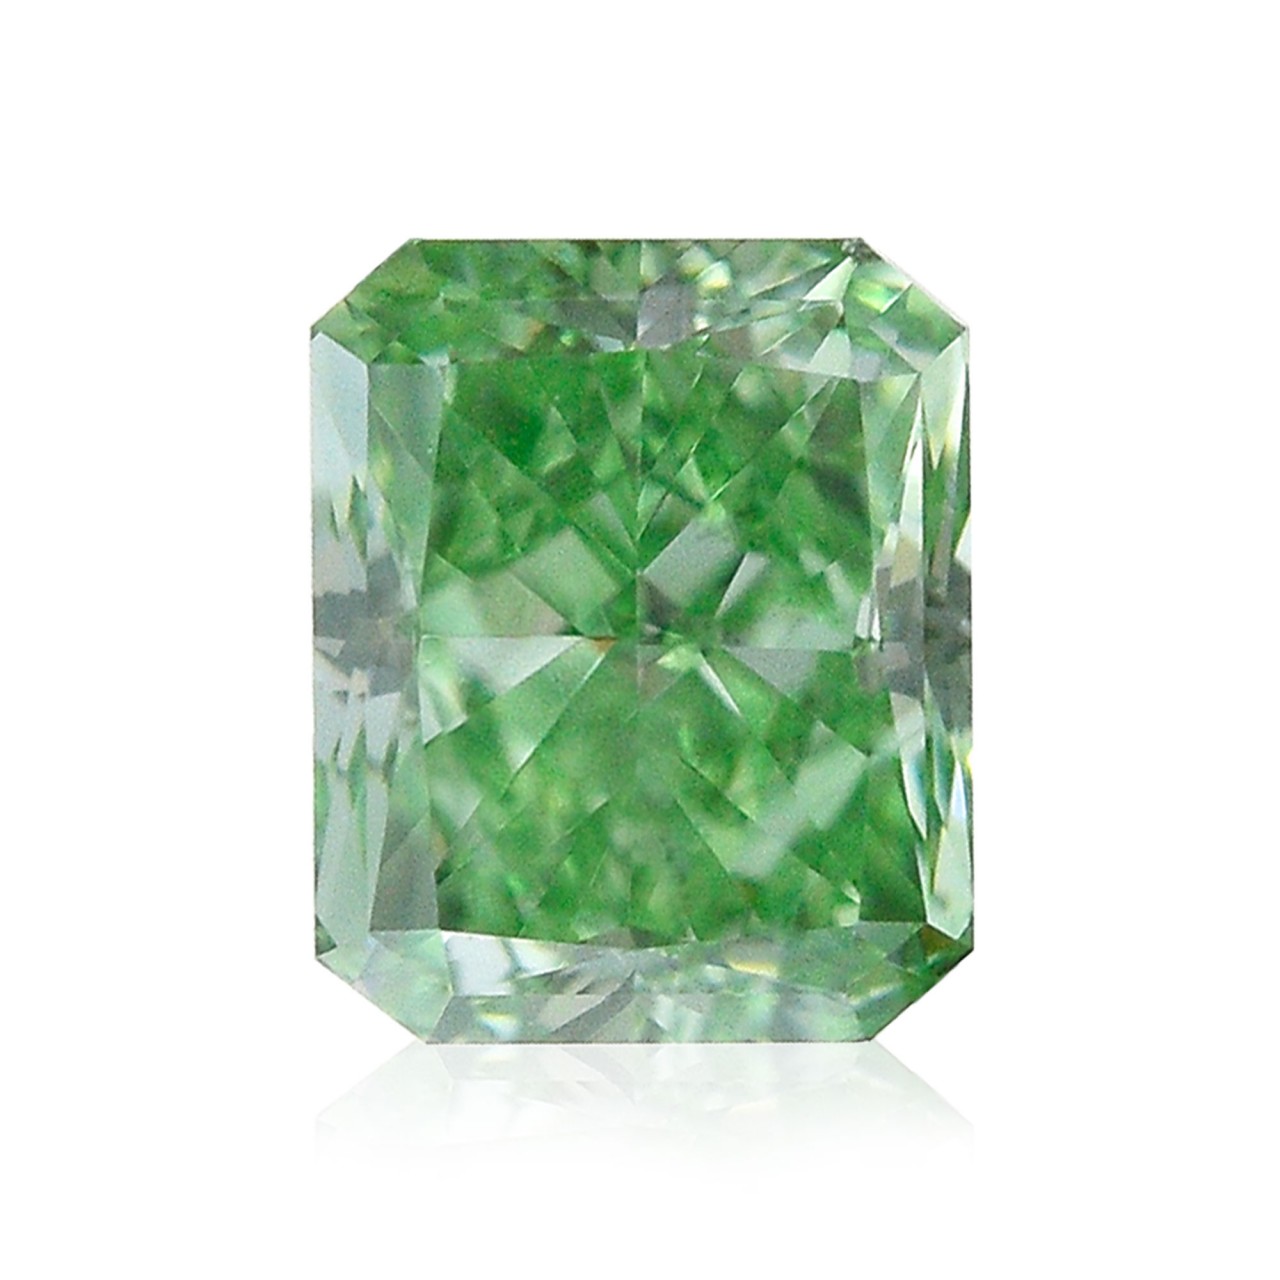 0.42 carat, Fancy Vivid Green Diamond, Radiant Shape, SI1 Clarity ...